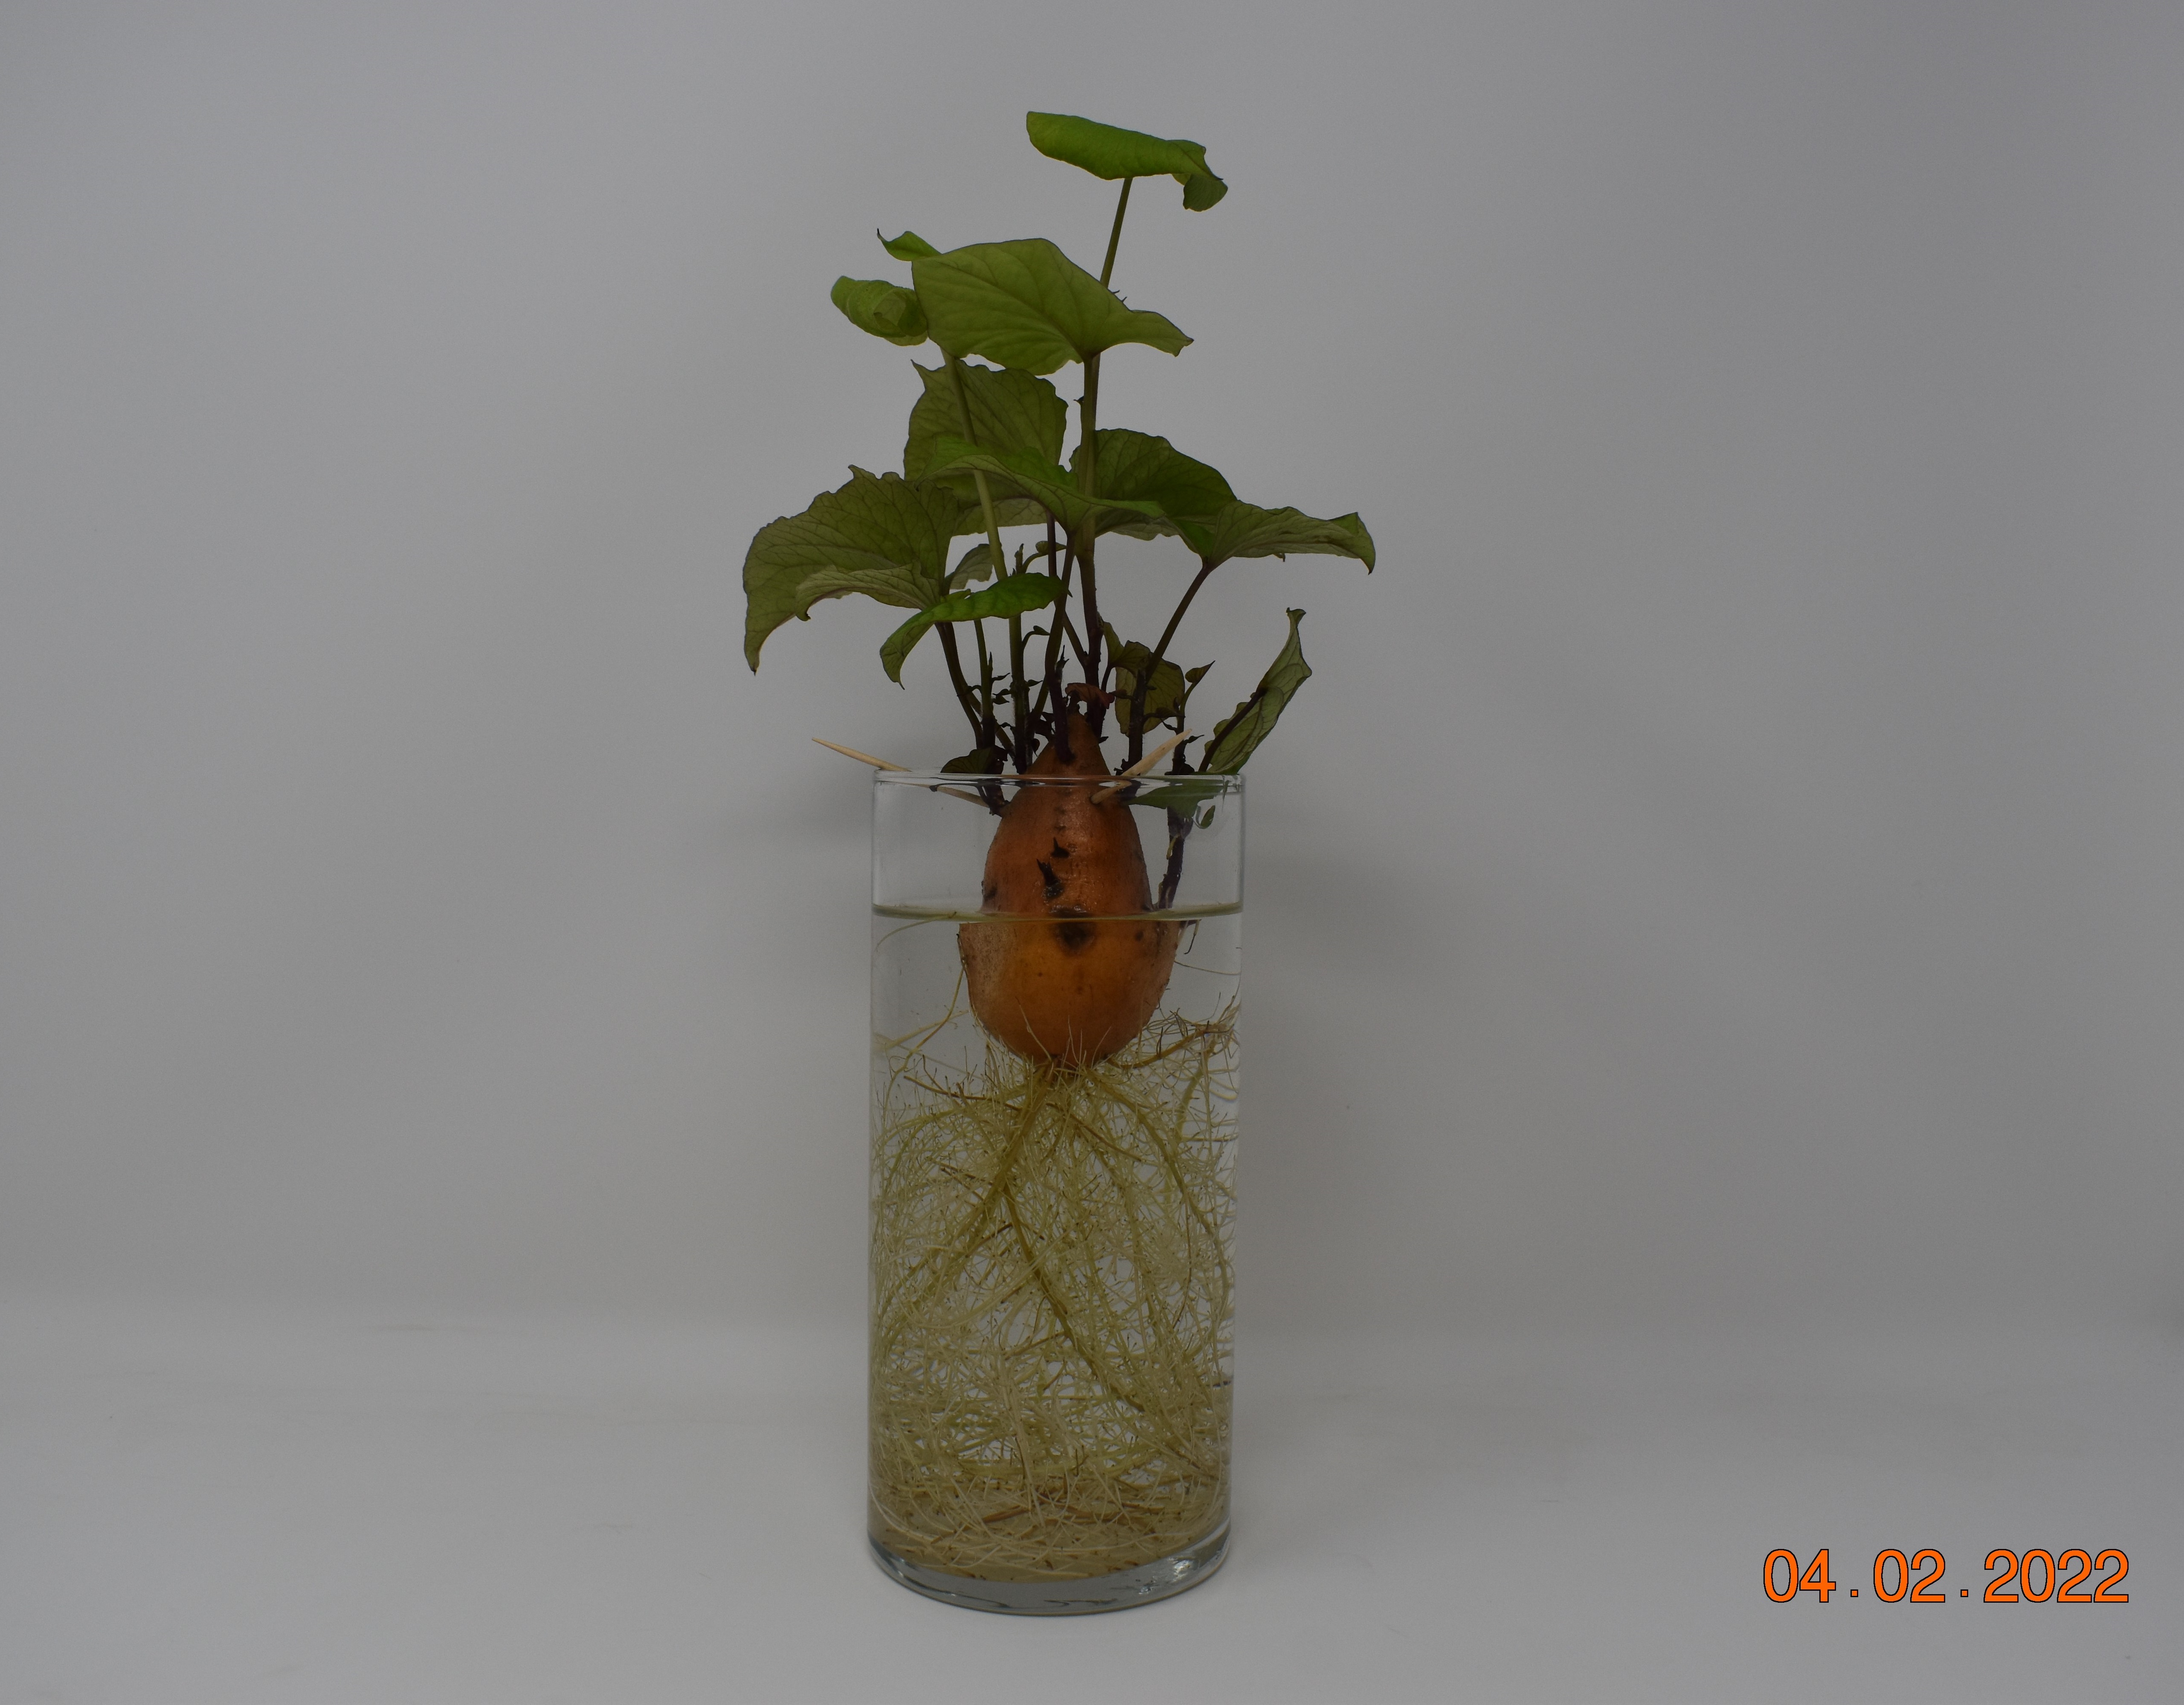 People's Choice: Varsha Singh, Study of Sweetpotato